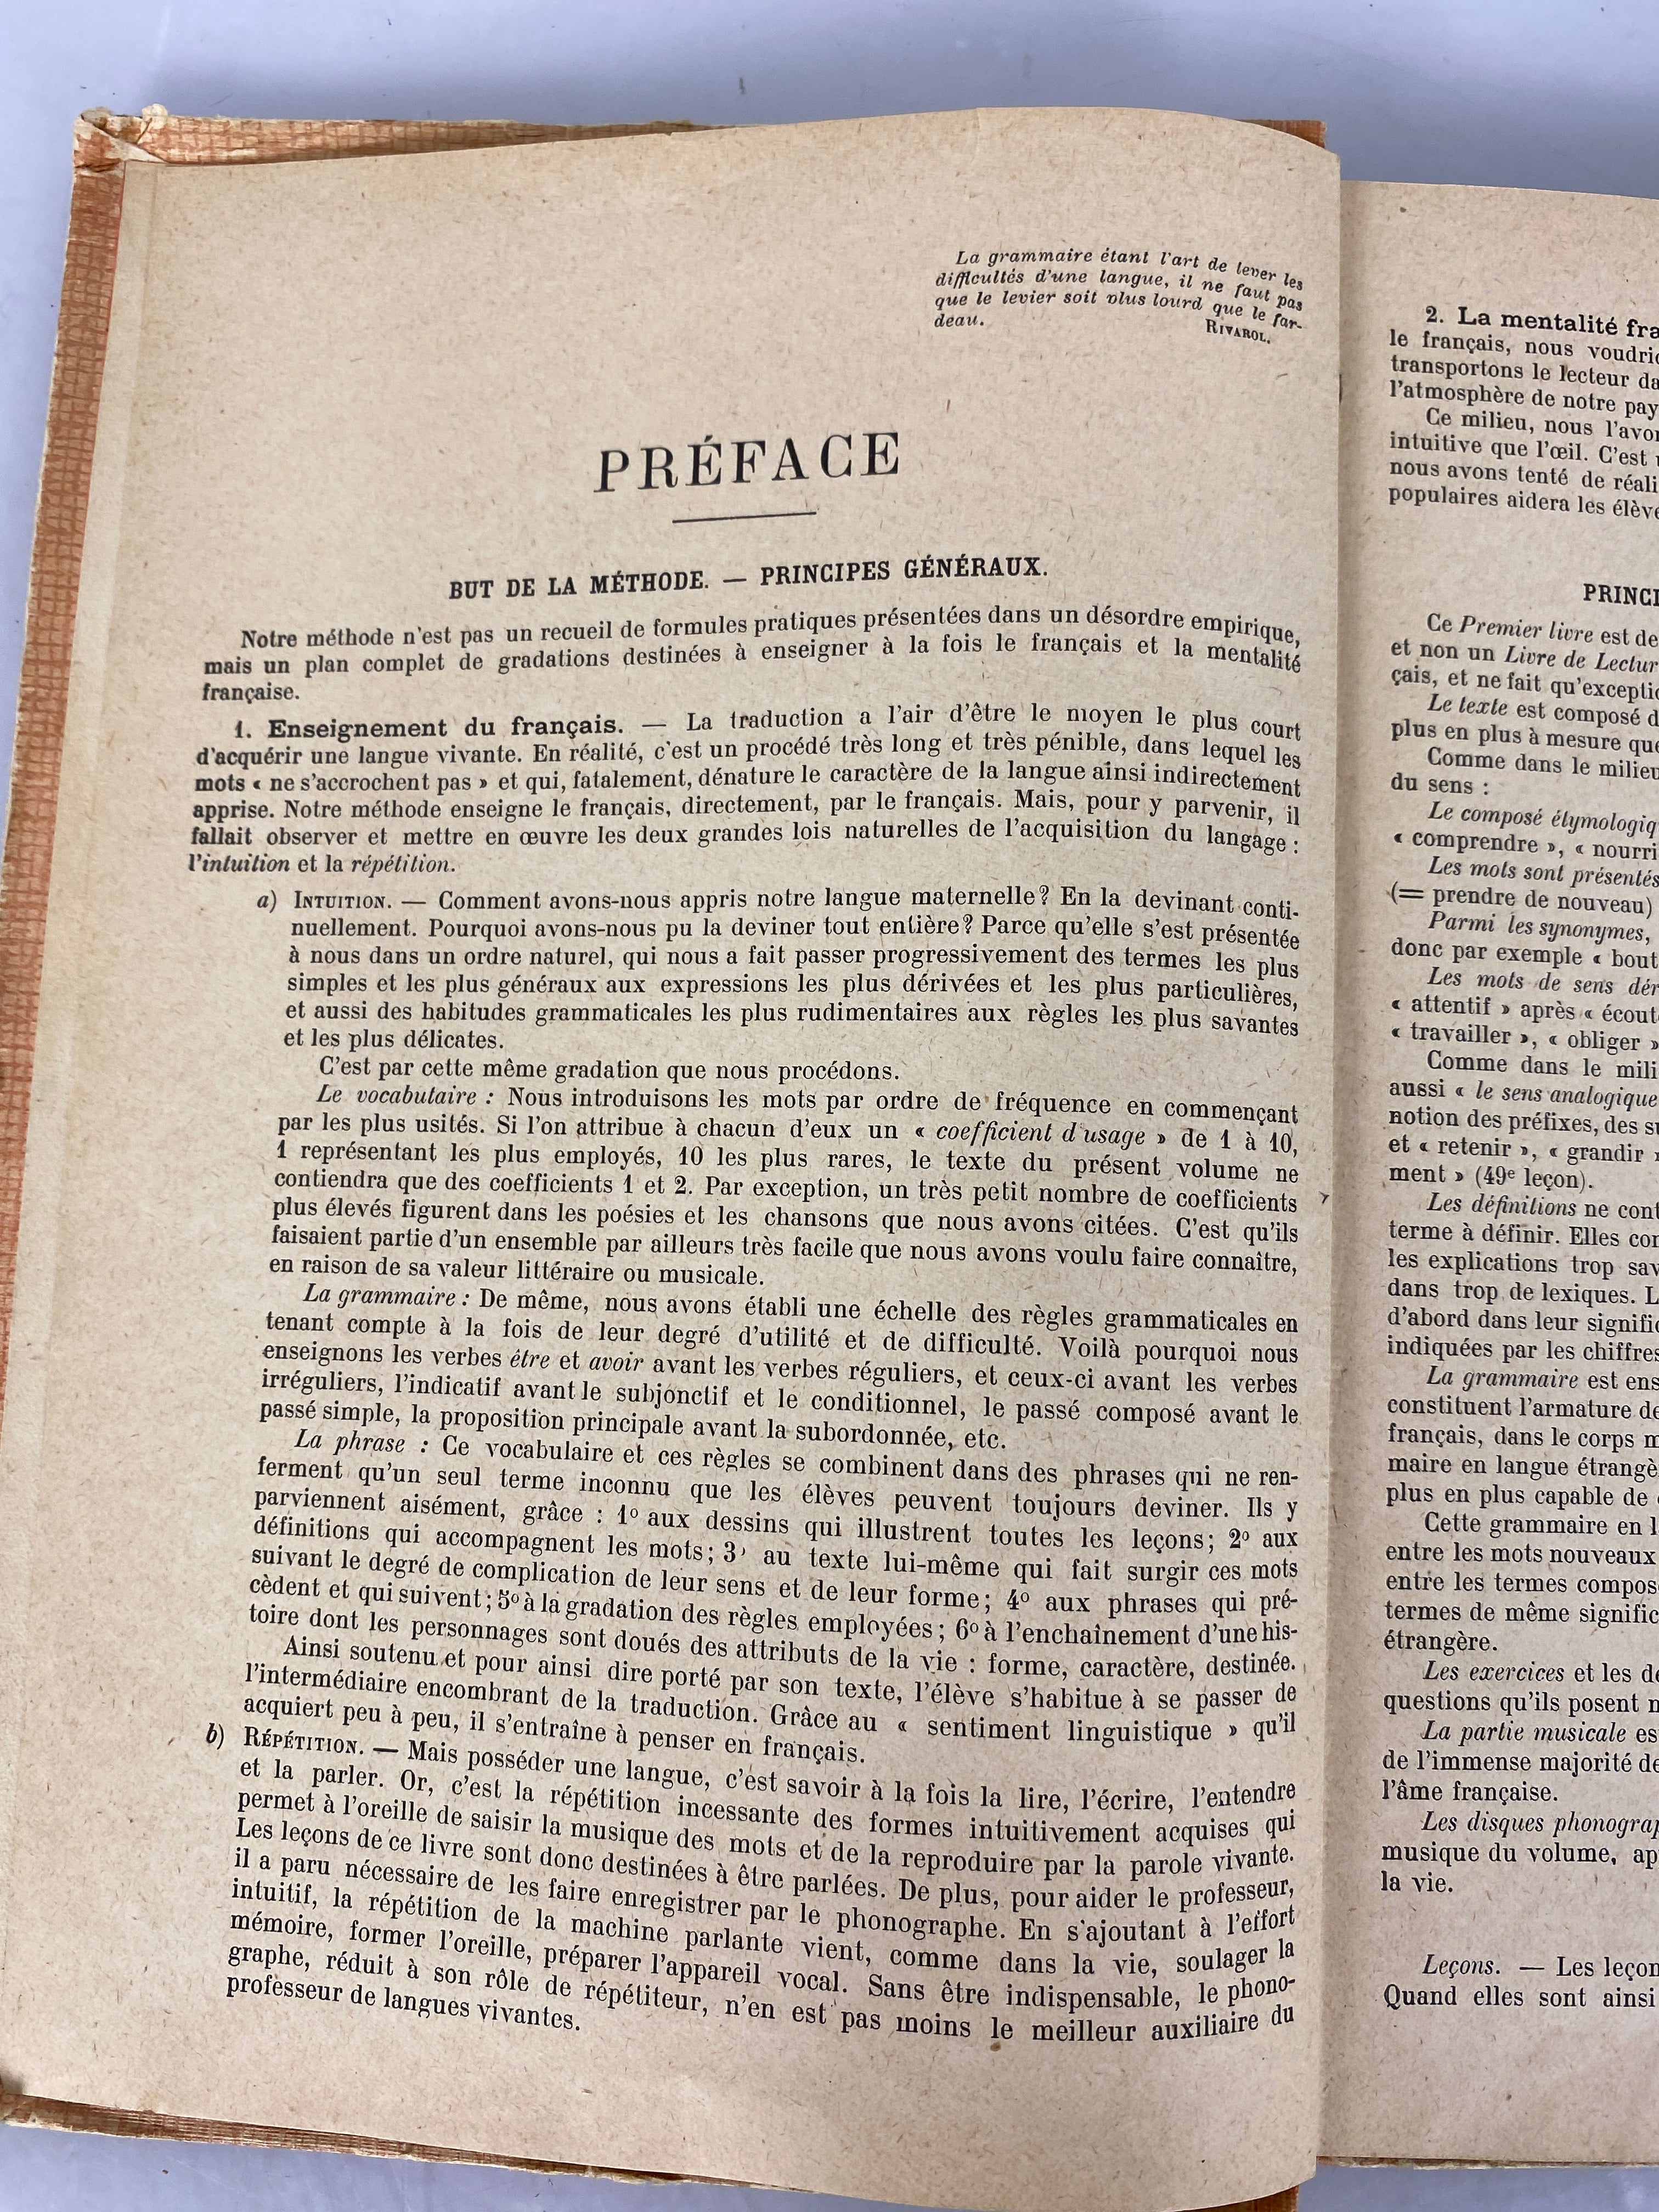 Le Premier Livre de Francais by Louis Marchand (First Book of French) 5th Edition (c1920) HC